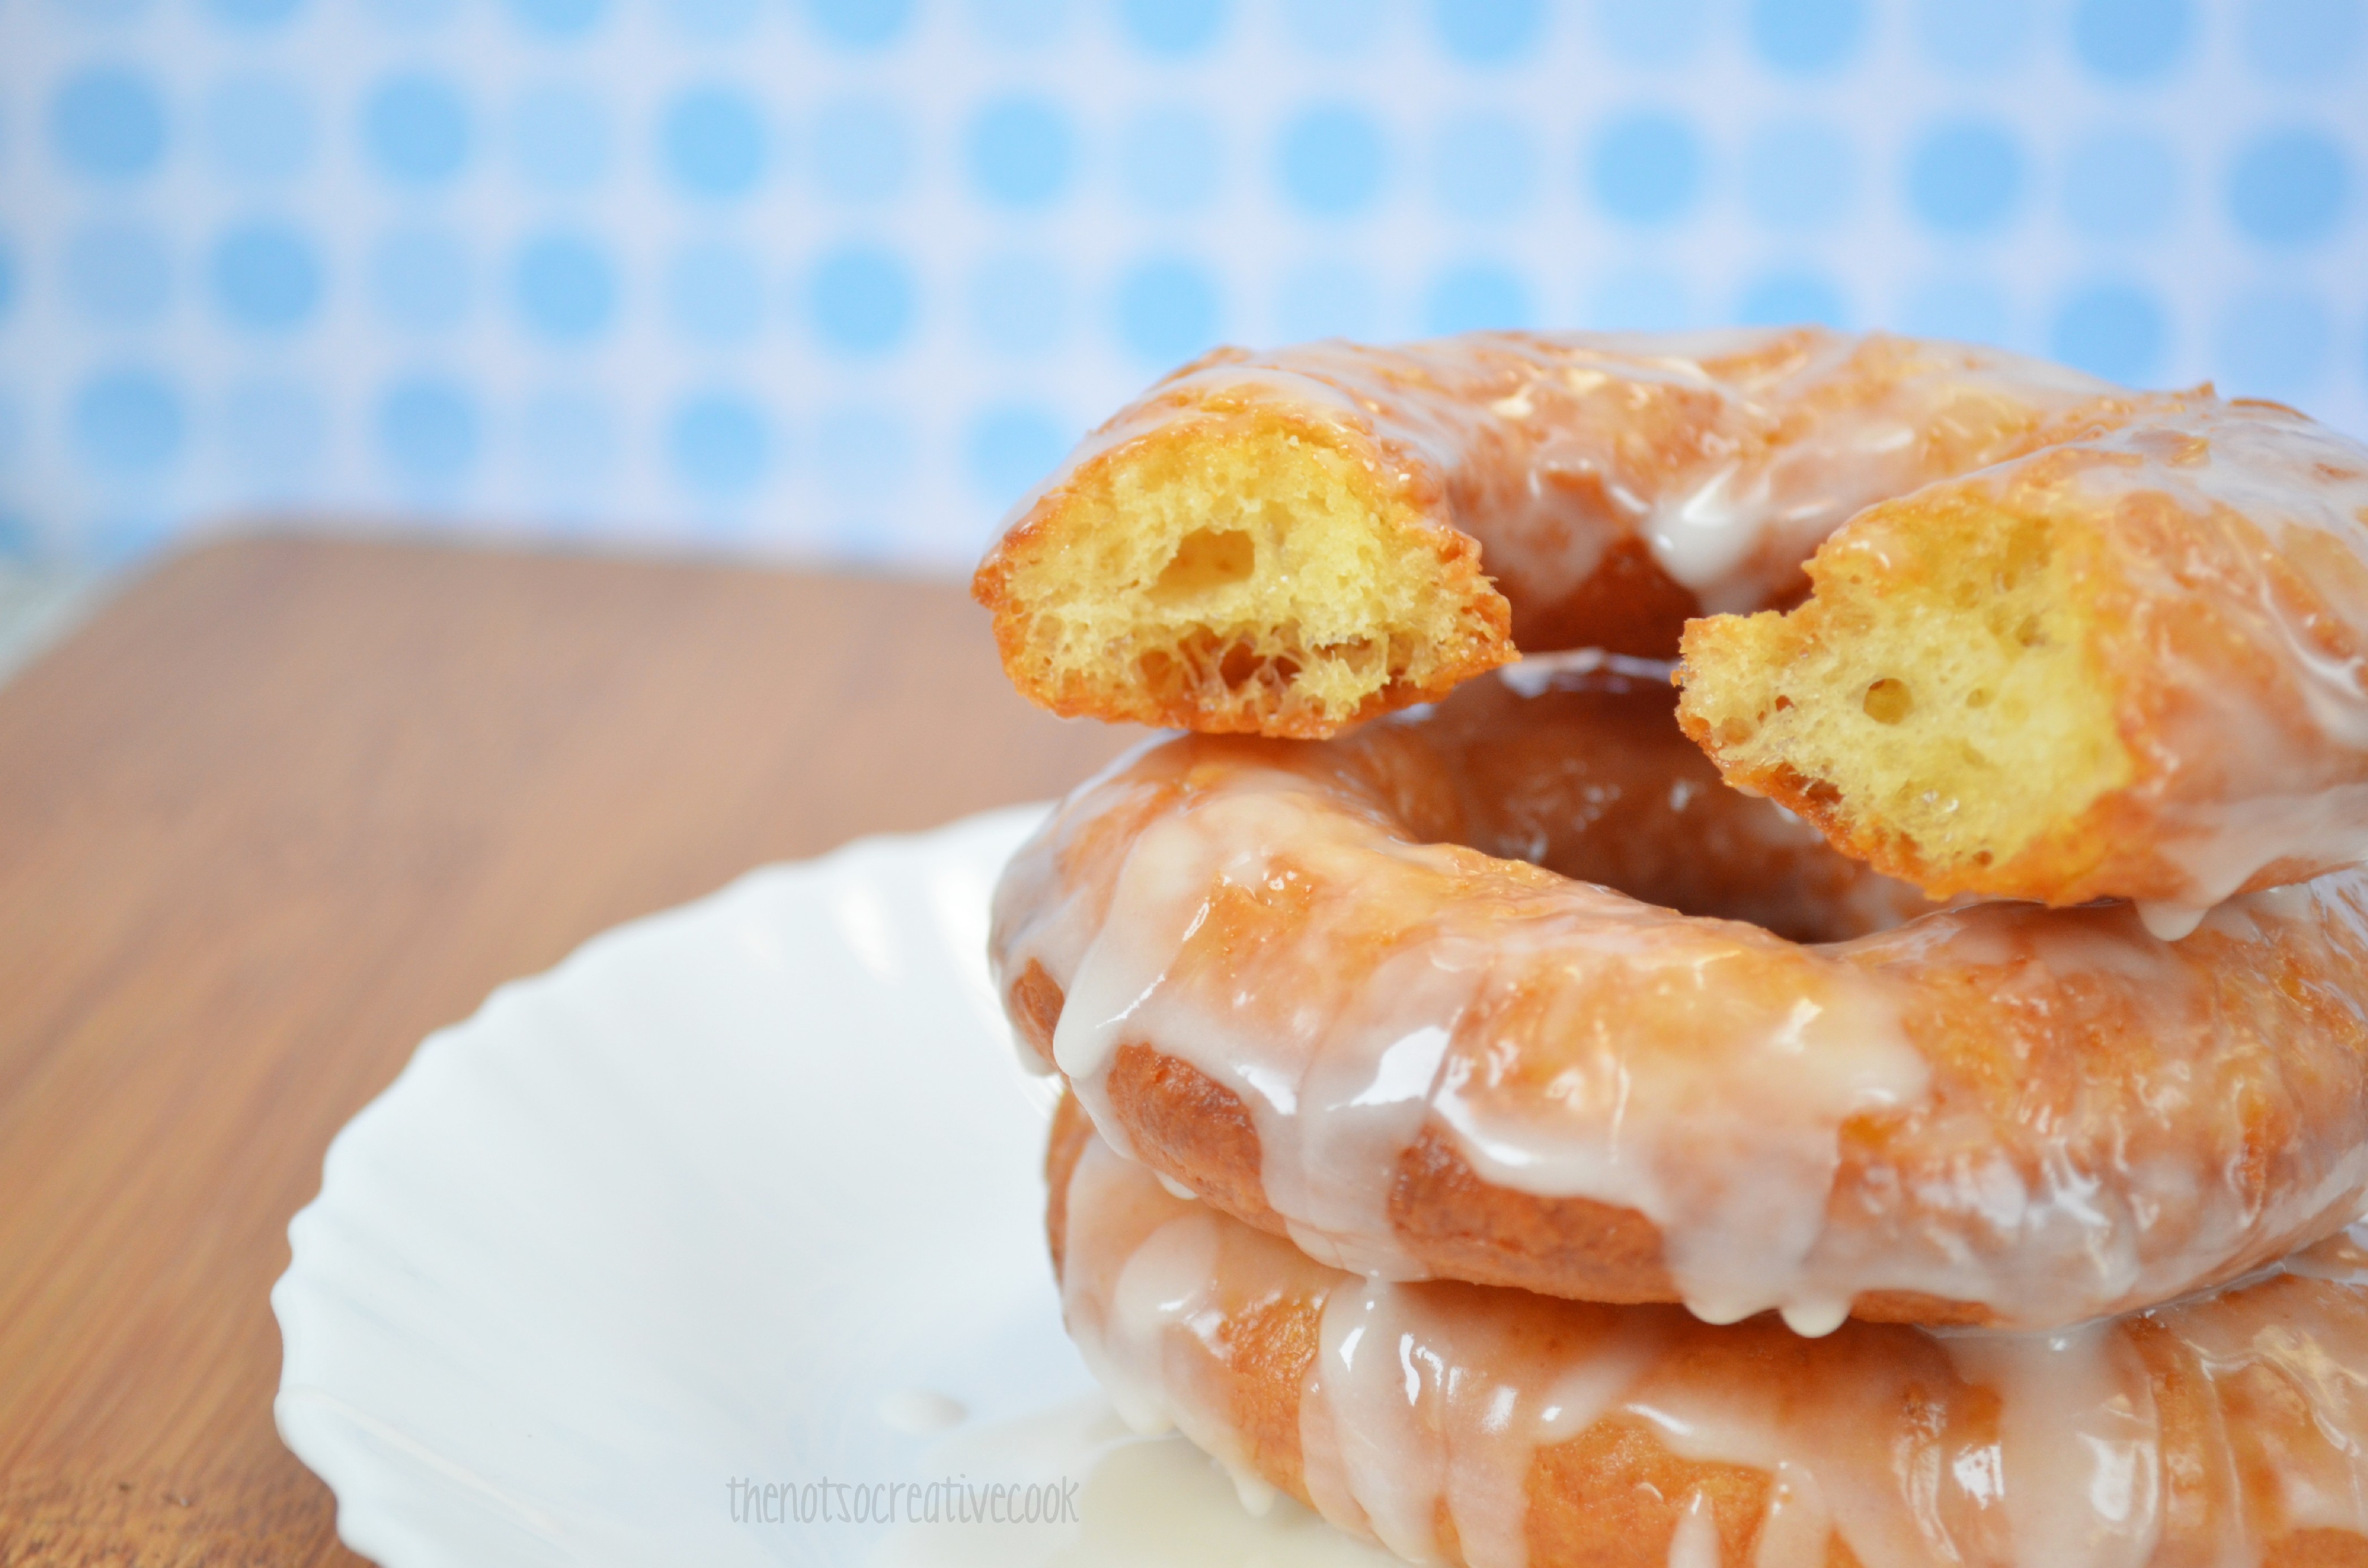 thenotsocreativecook-SugarGlazed donuts2